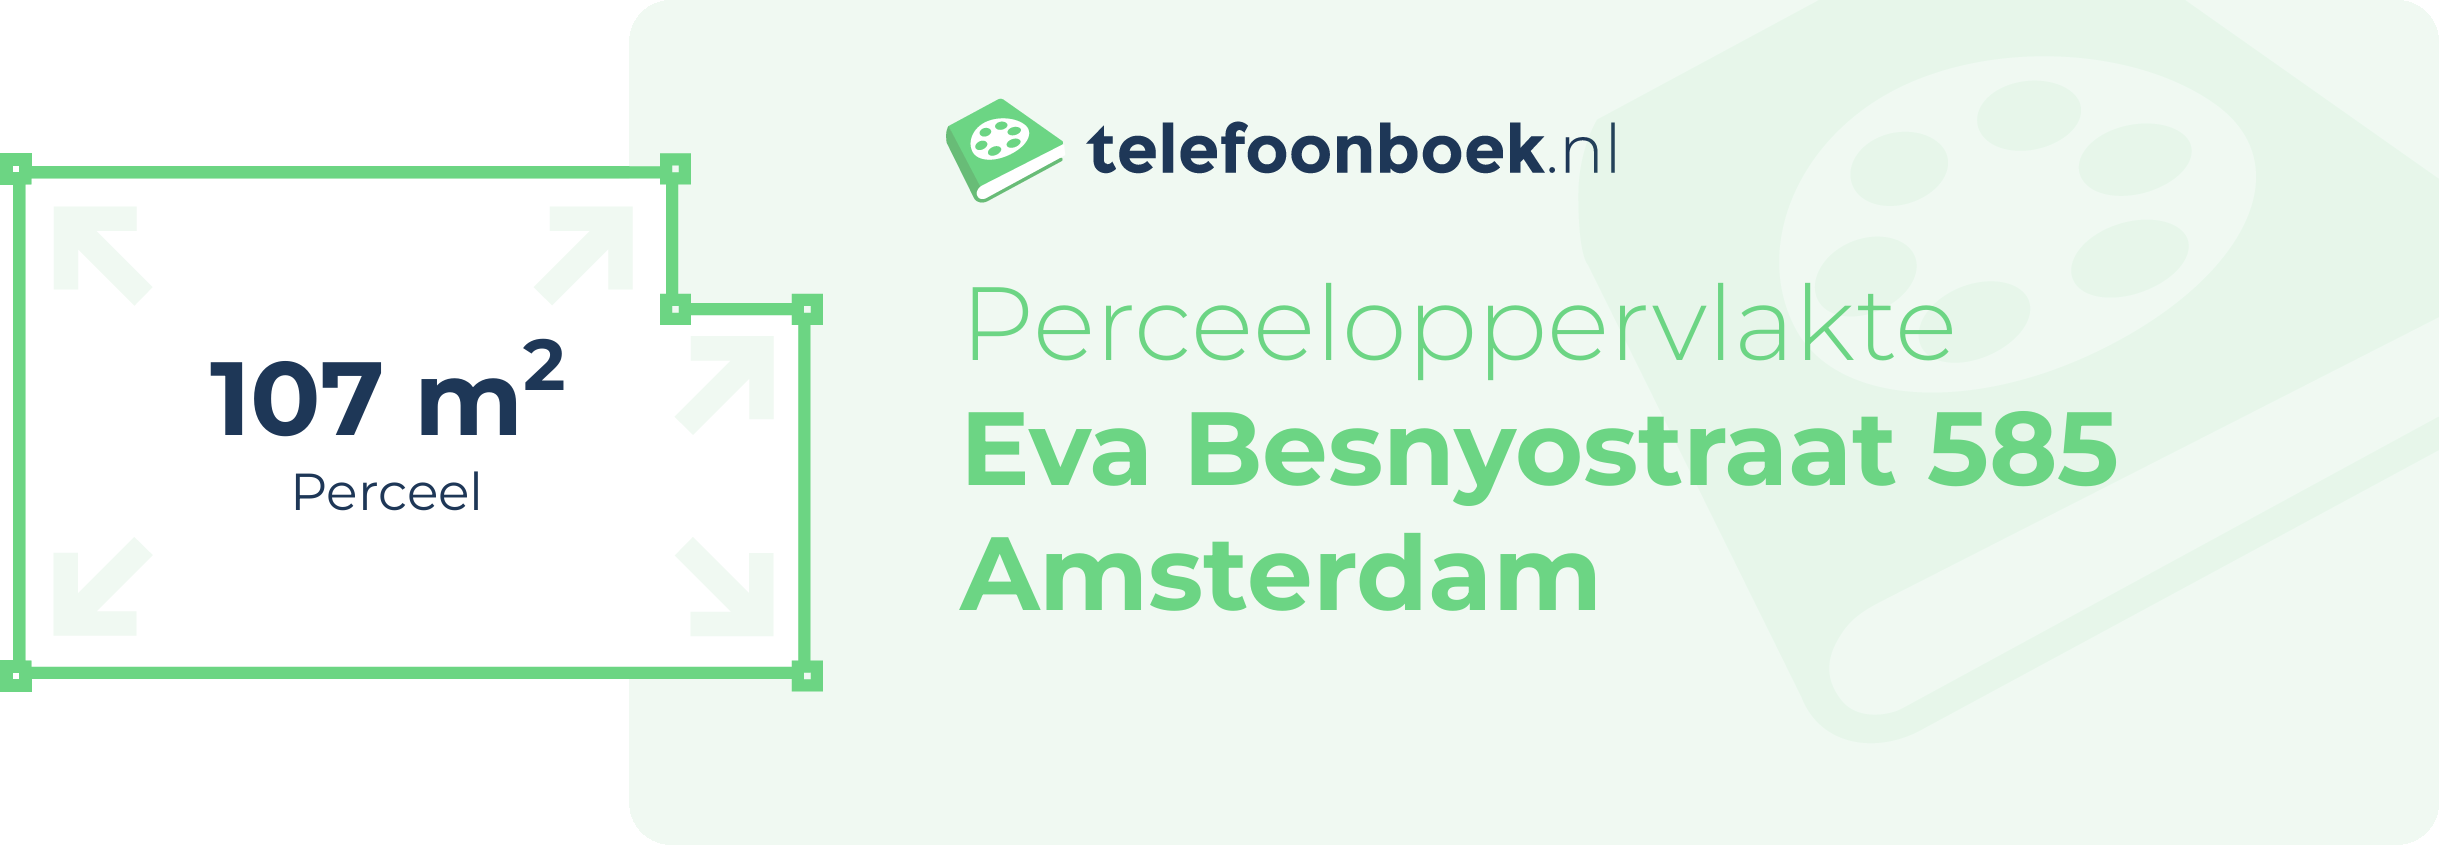 Perceeloppervlakte Eva Besnyostraat 585 Amsterdam